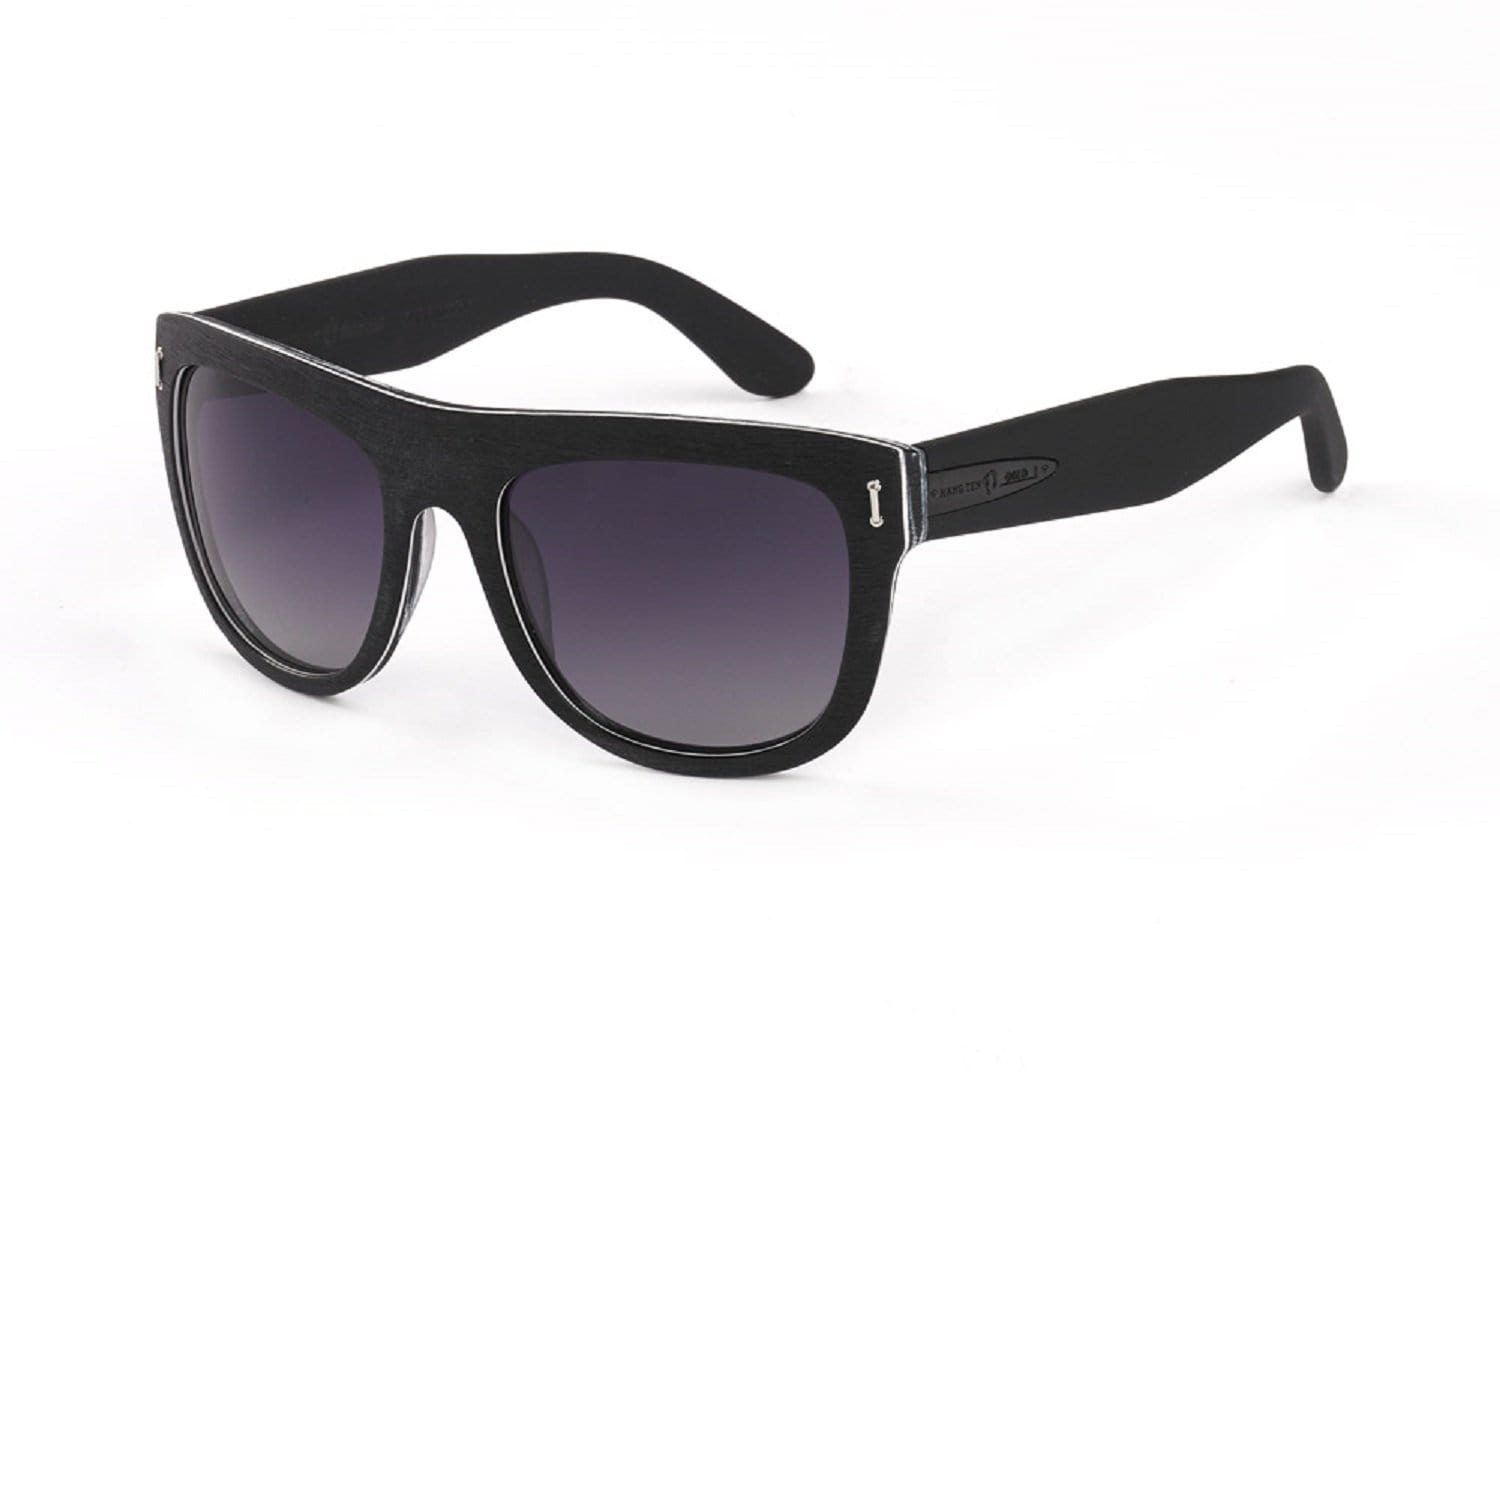 Hang Ten Gold Apparel : Eyewear - Sunglasses Hang Ten Gold Surf Woody-Wood Black/Gradient Smoke Lens